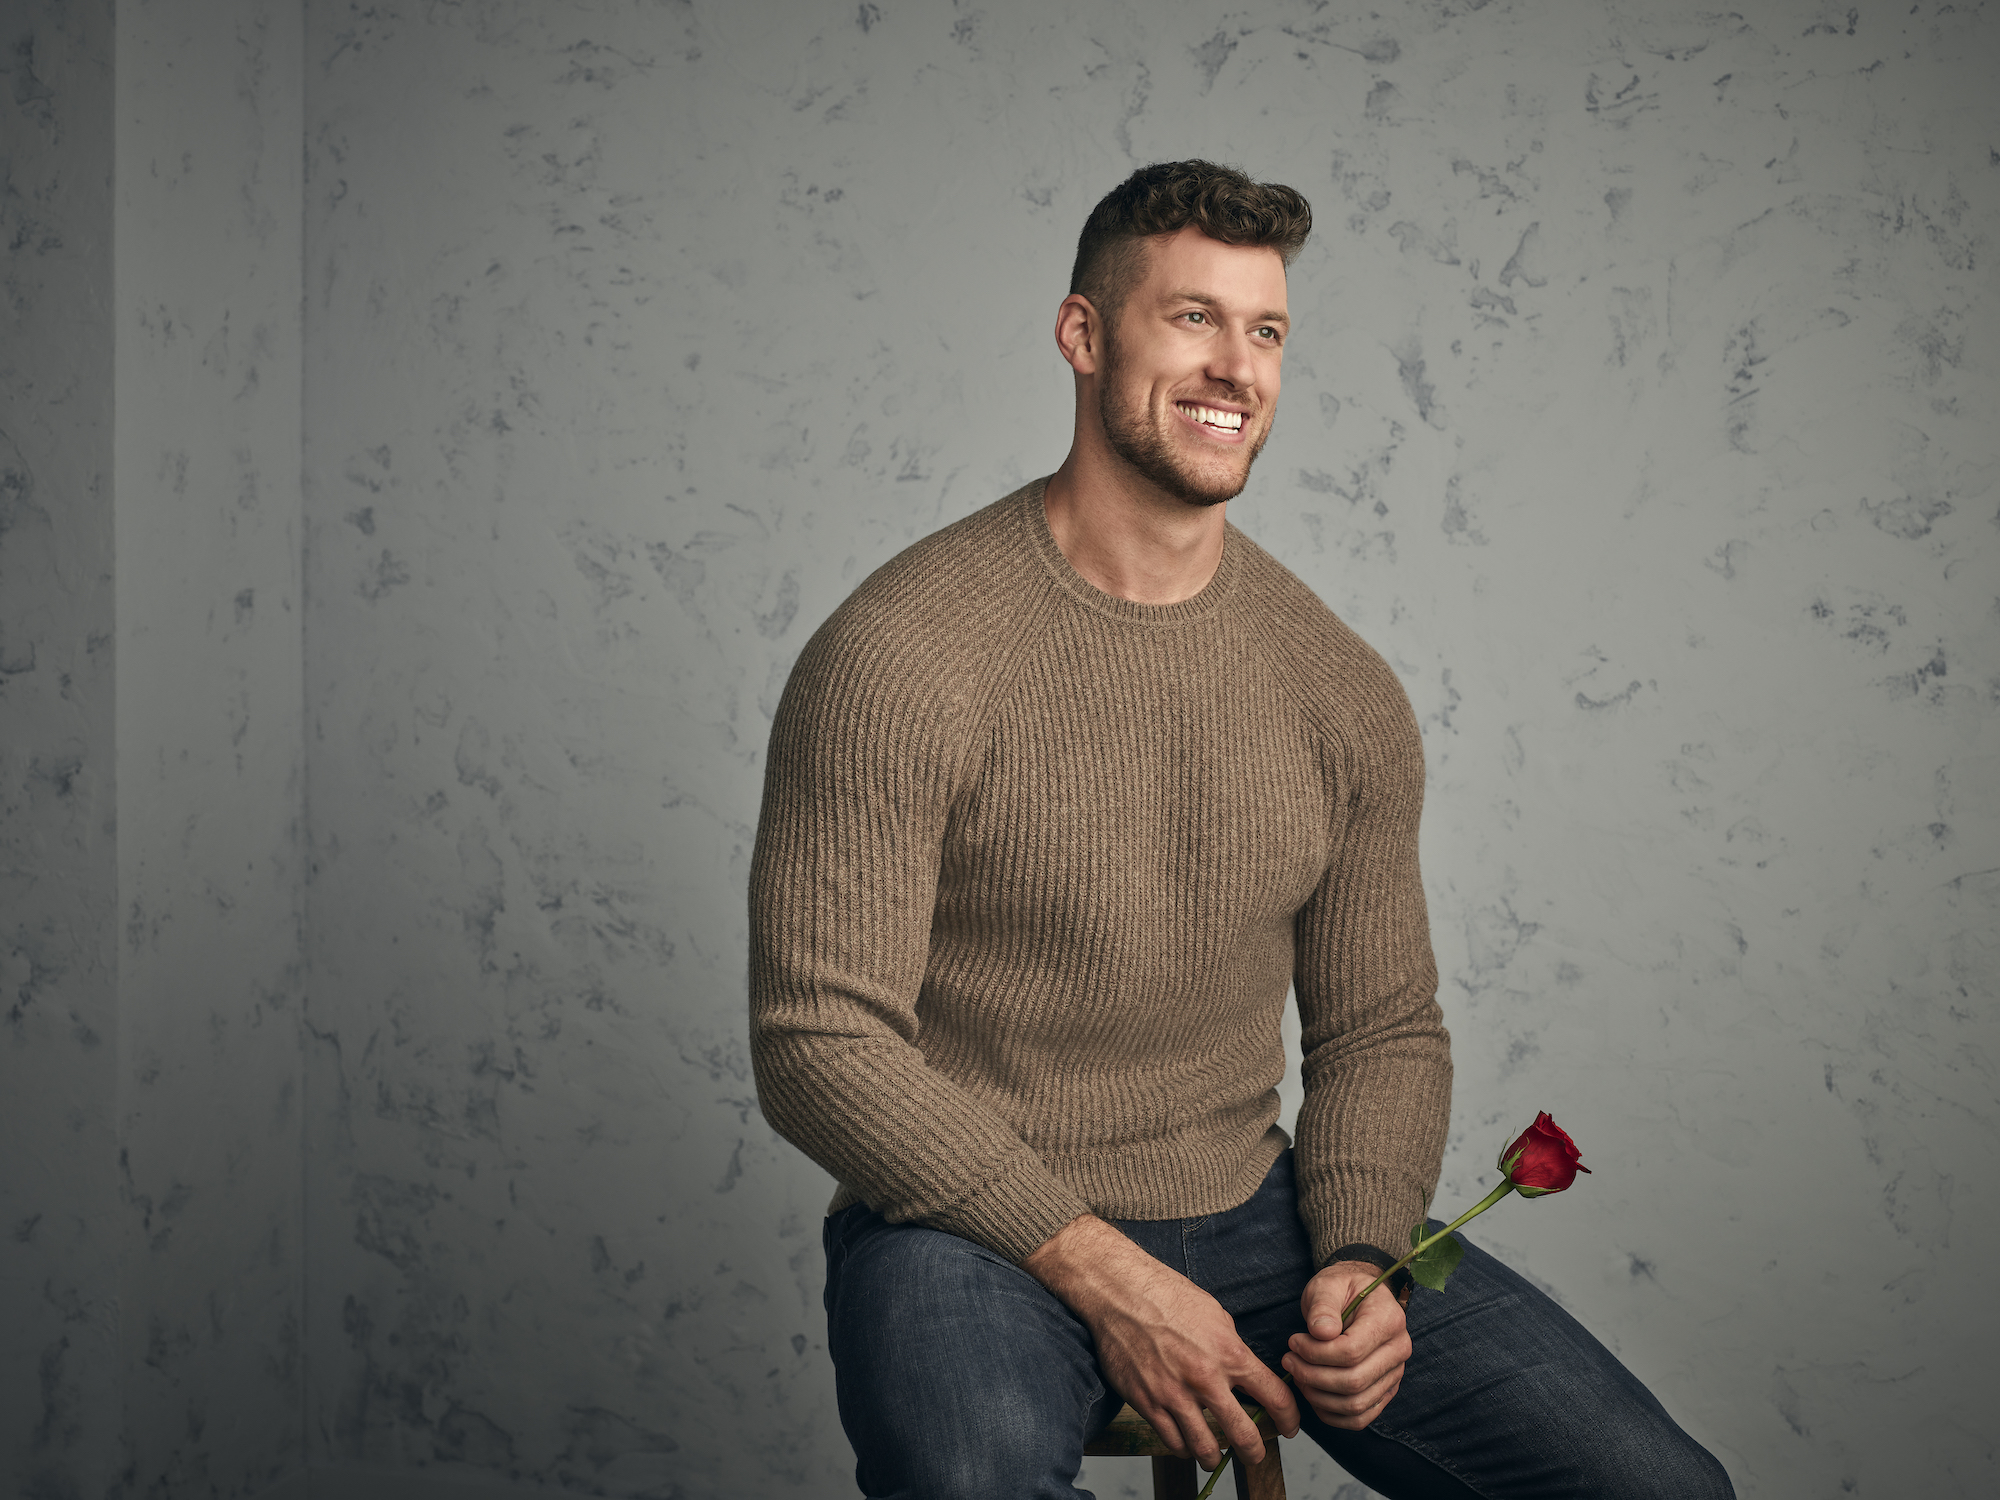 'The Bachelor' 2022 star Clayton Echard in a tan long-sleeved shirt